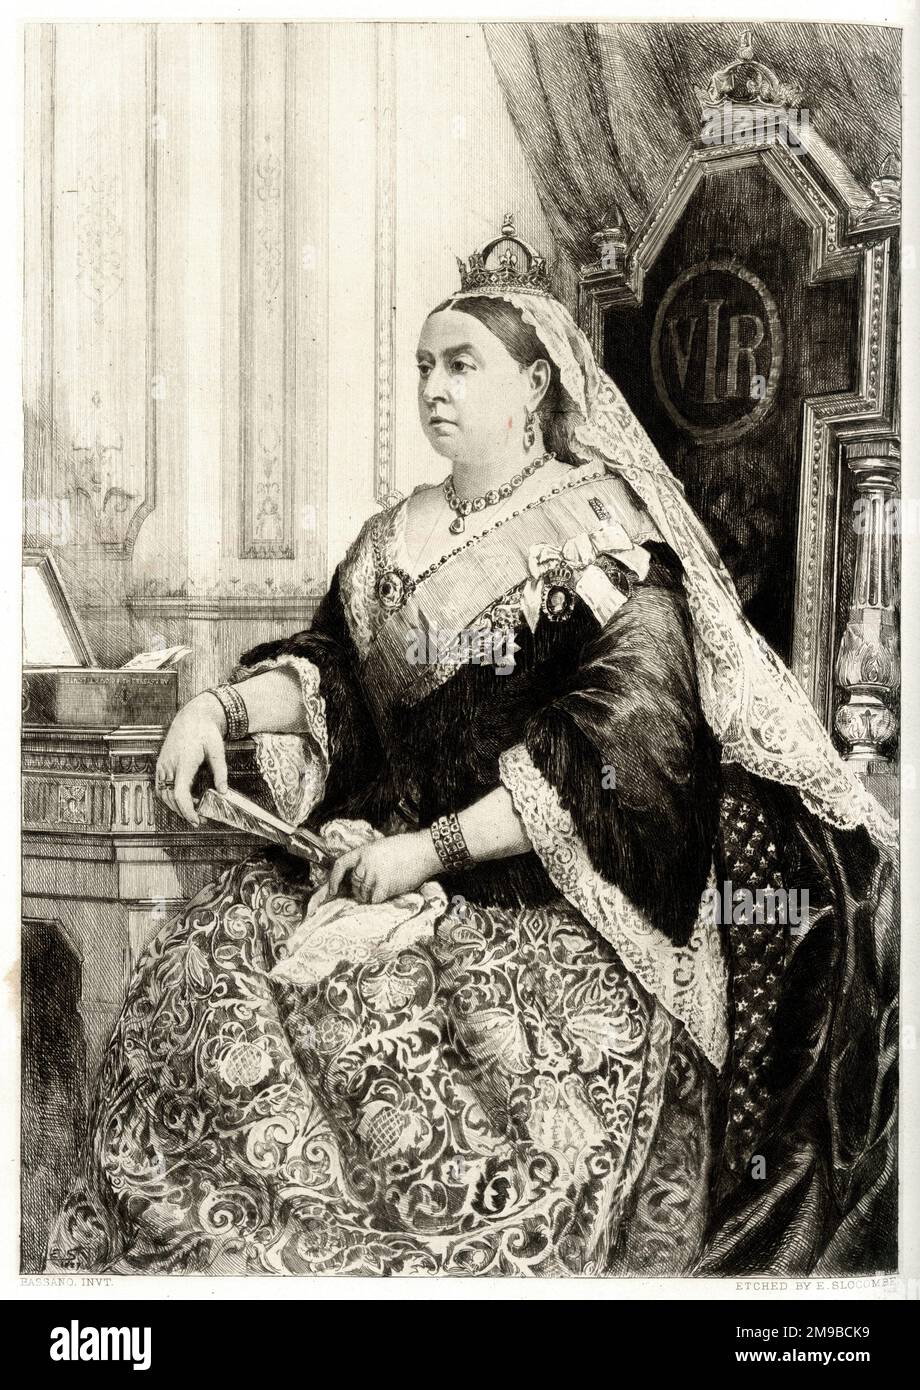 Retrato de la reina Victoria, conmemorando su Jubileo de Oro Foto de stock